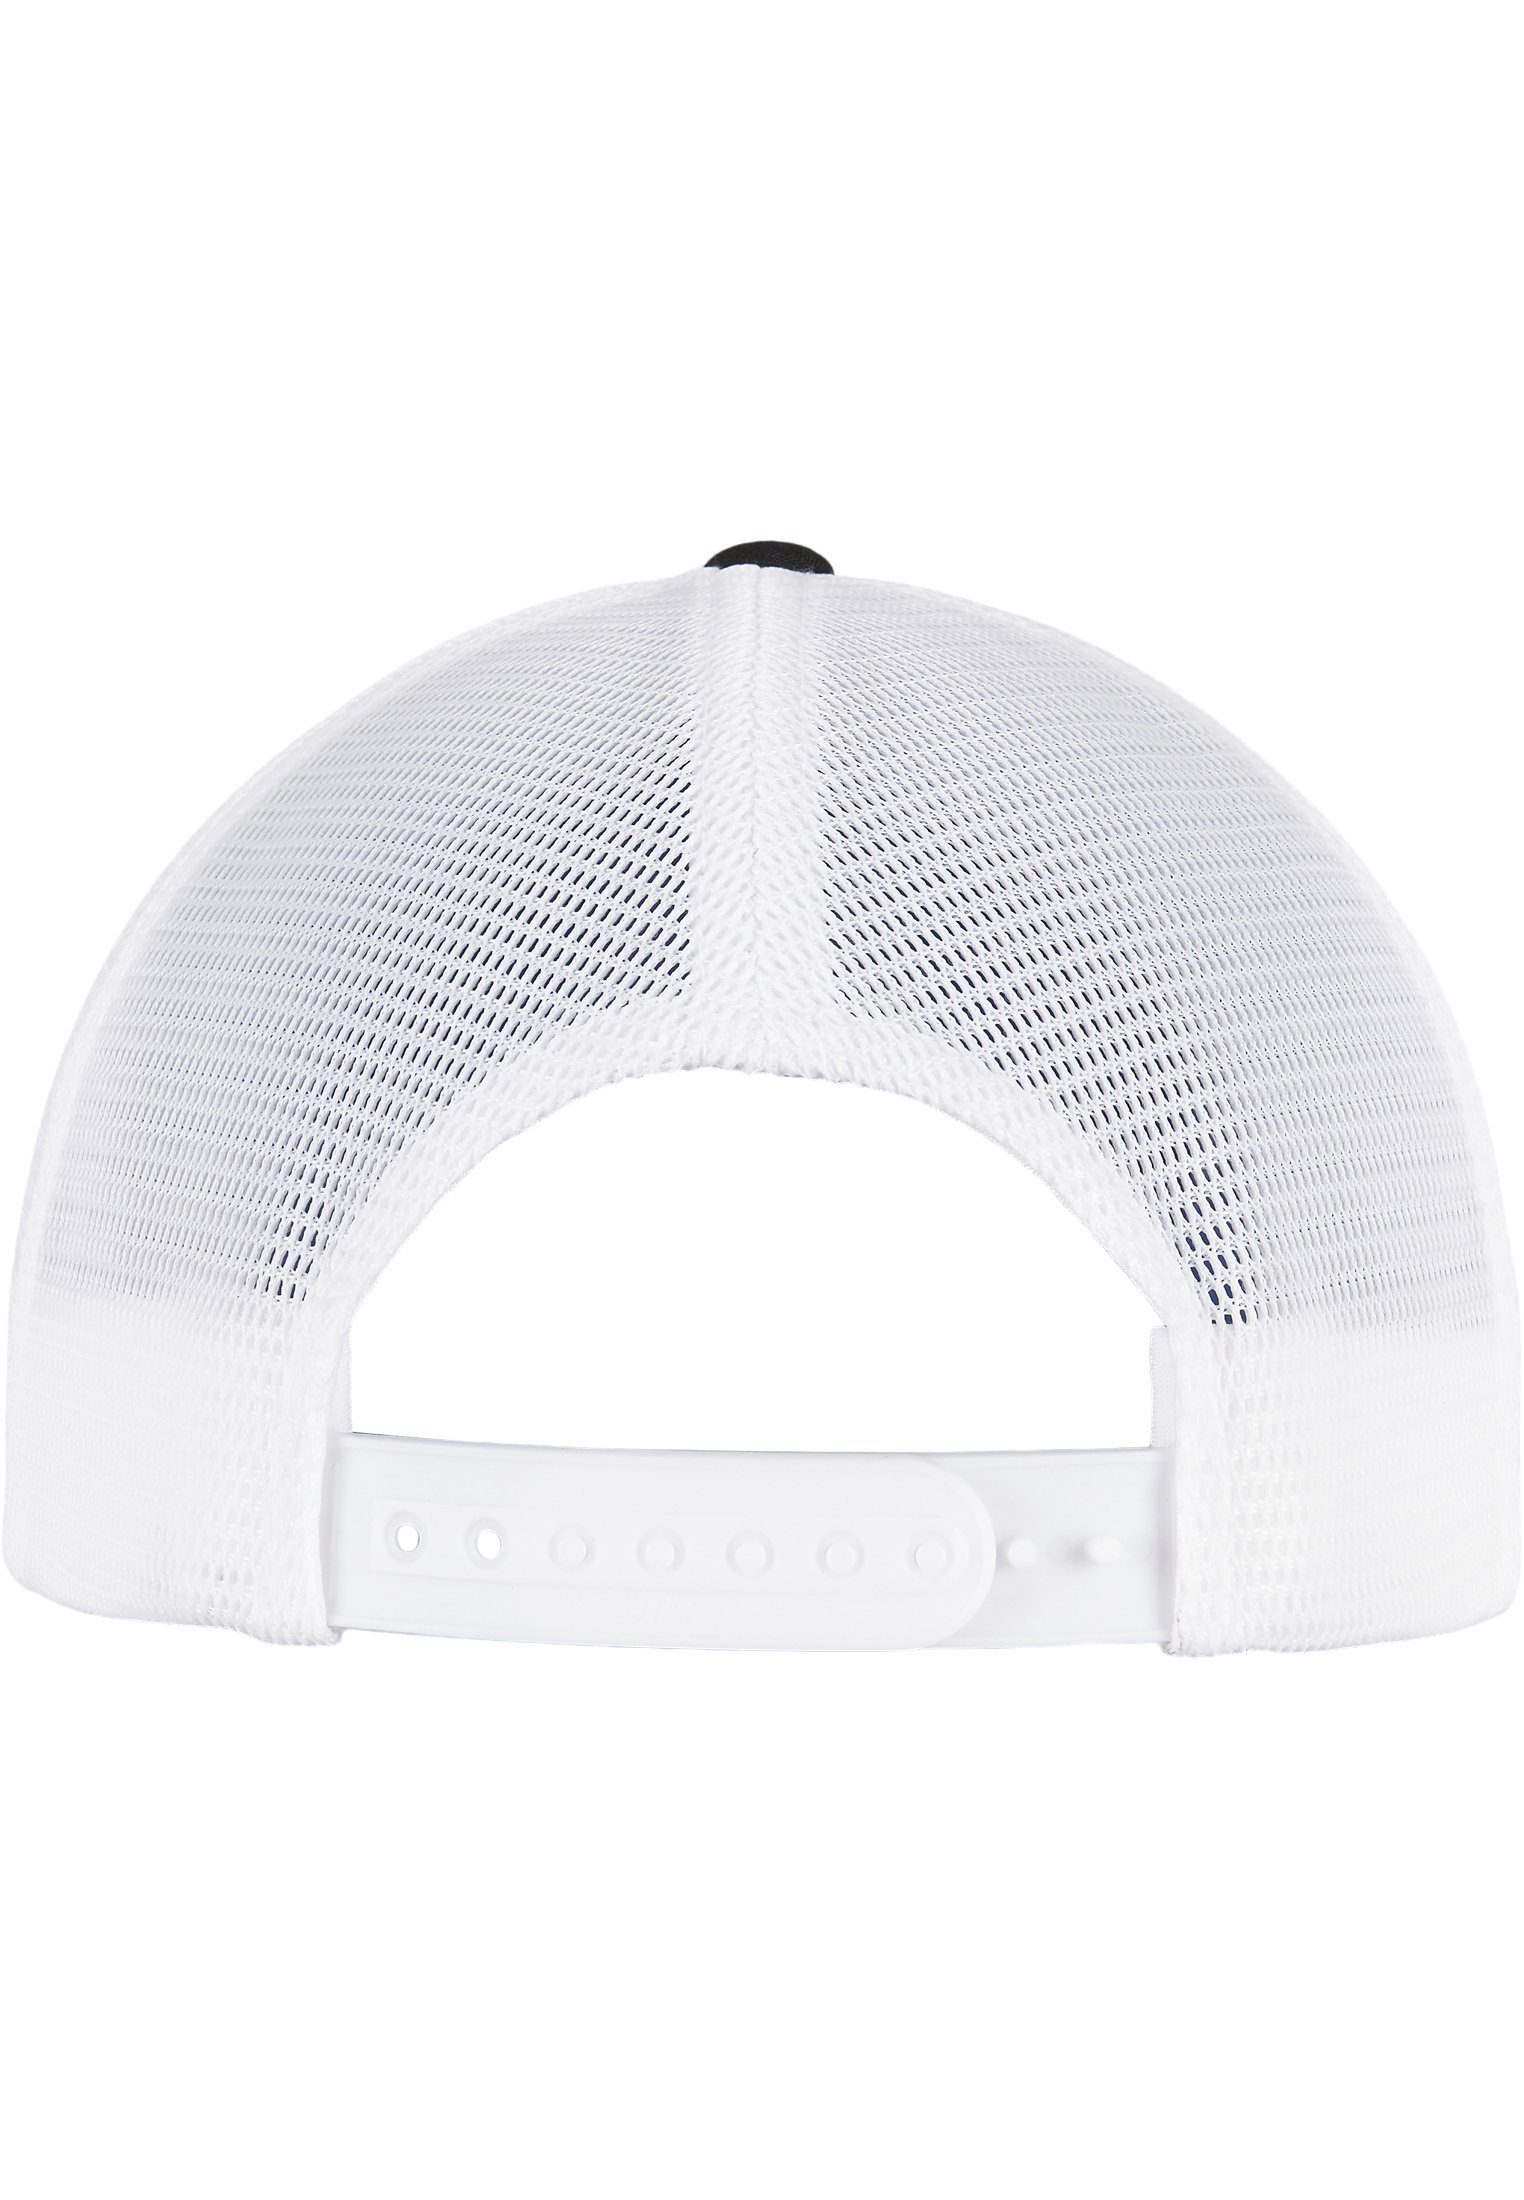 Flexfit Flex Cap 360° Accessoires black/white 2-Tone Omnimesh Cap